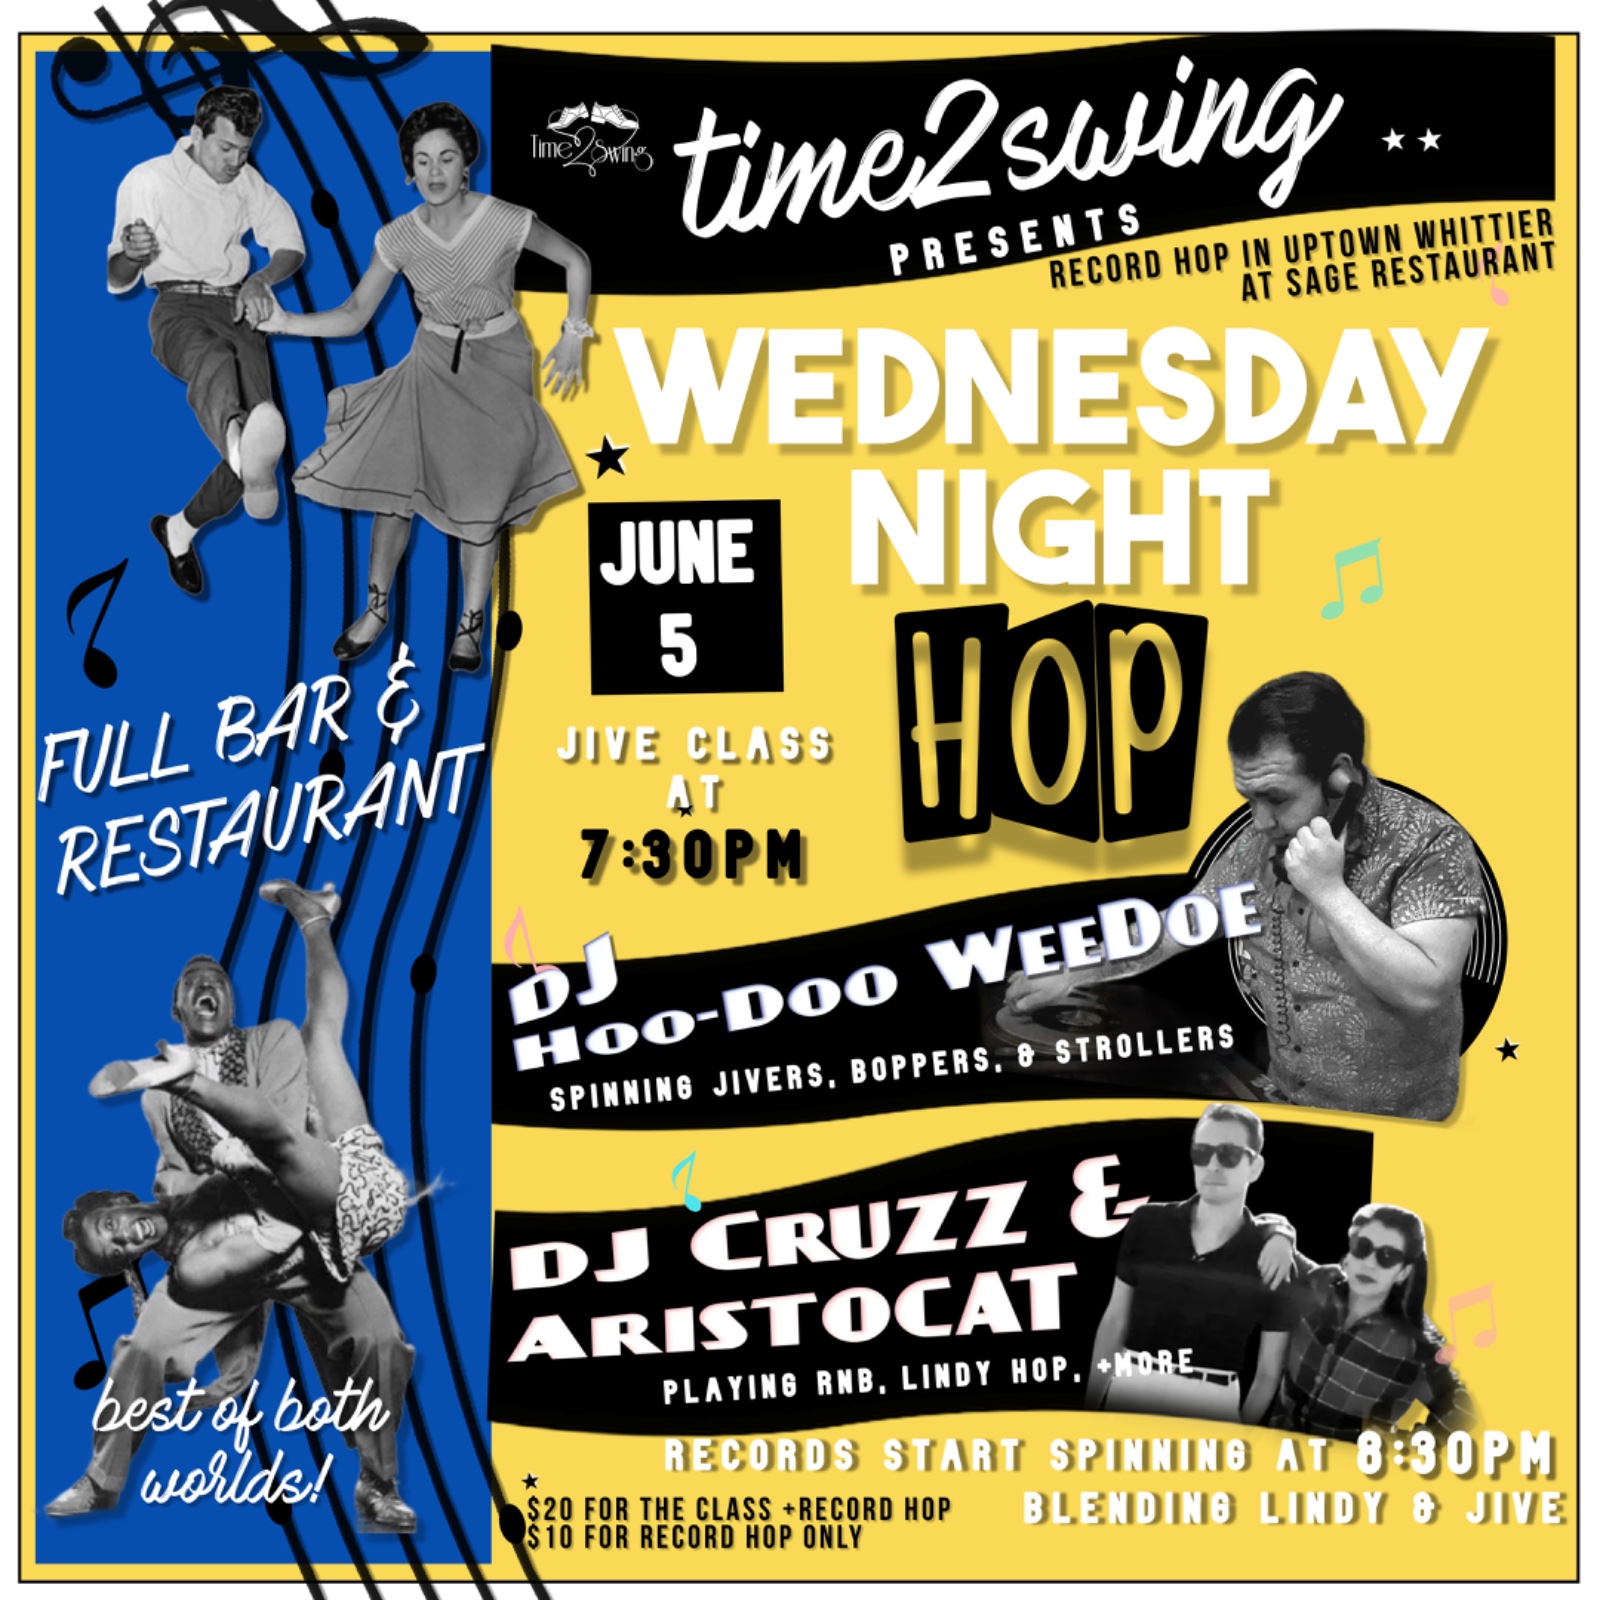 Wednesday Night Hop! Lindy & Jive record hop